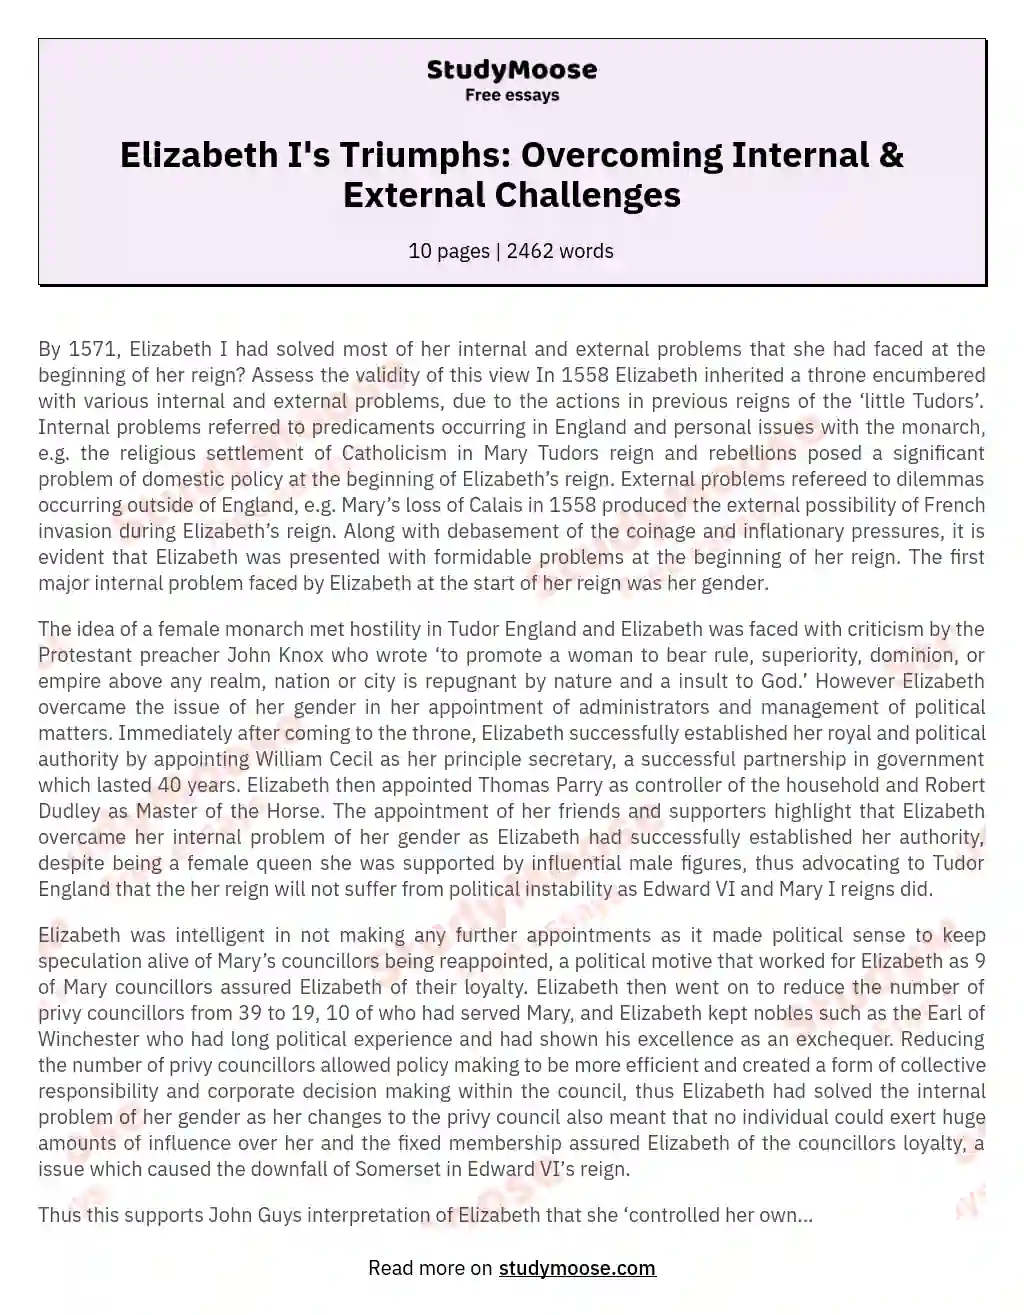 Elizabeth I's Triumphs: Overcoming Internal & External Challenges essay